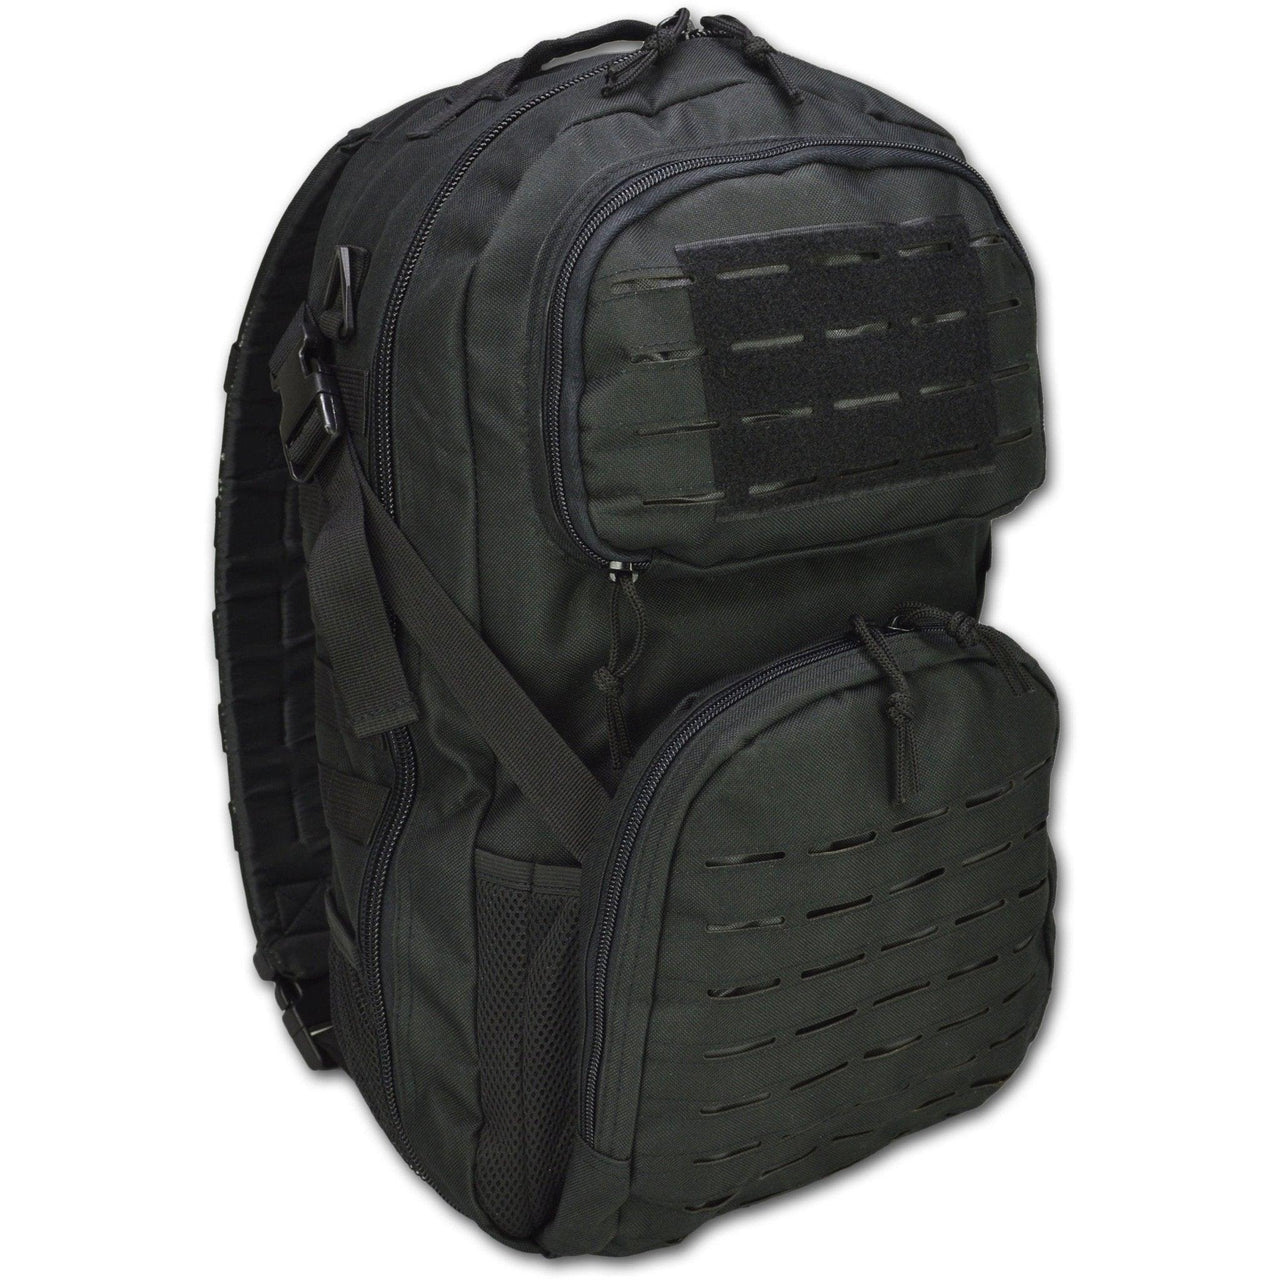 MEDIC-X Modular Tactical Medic Backpack - Vendor